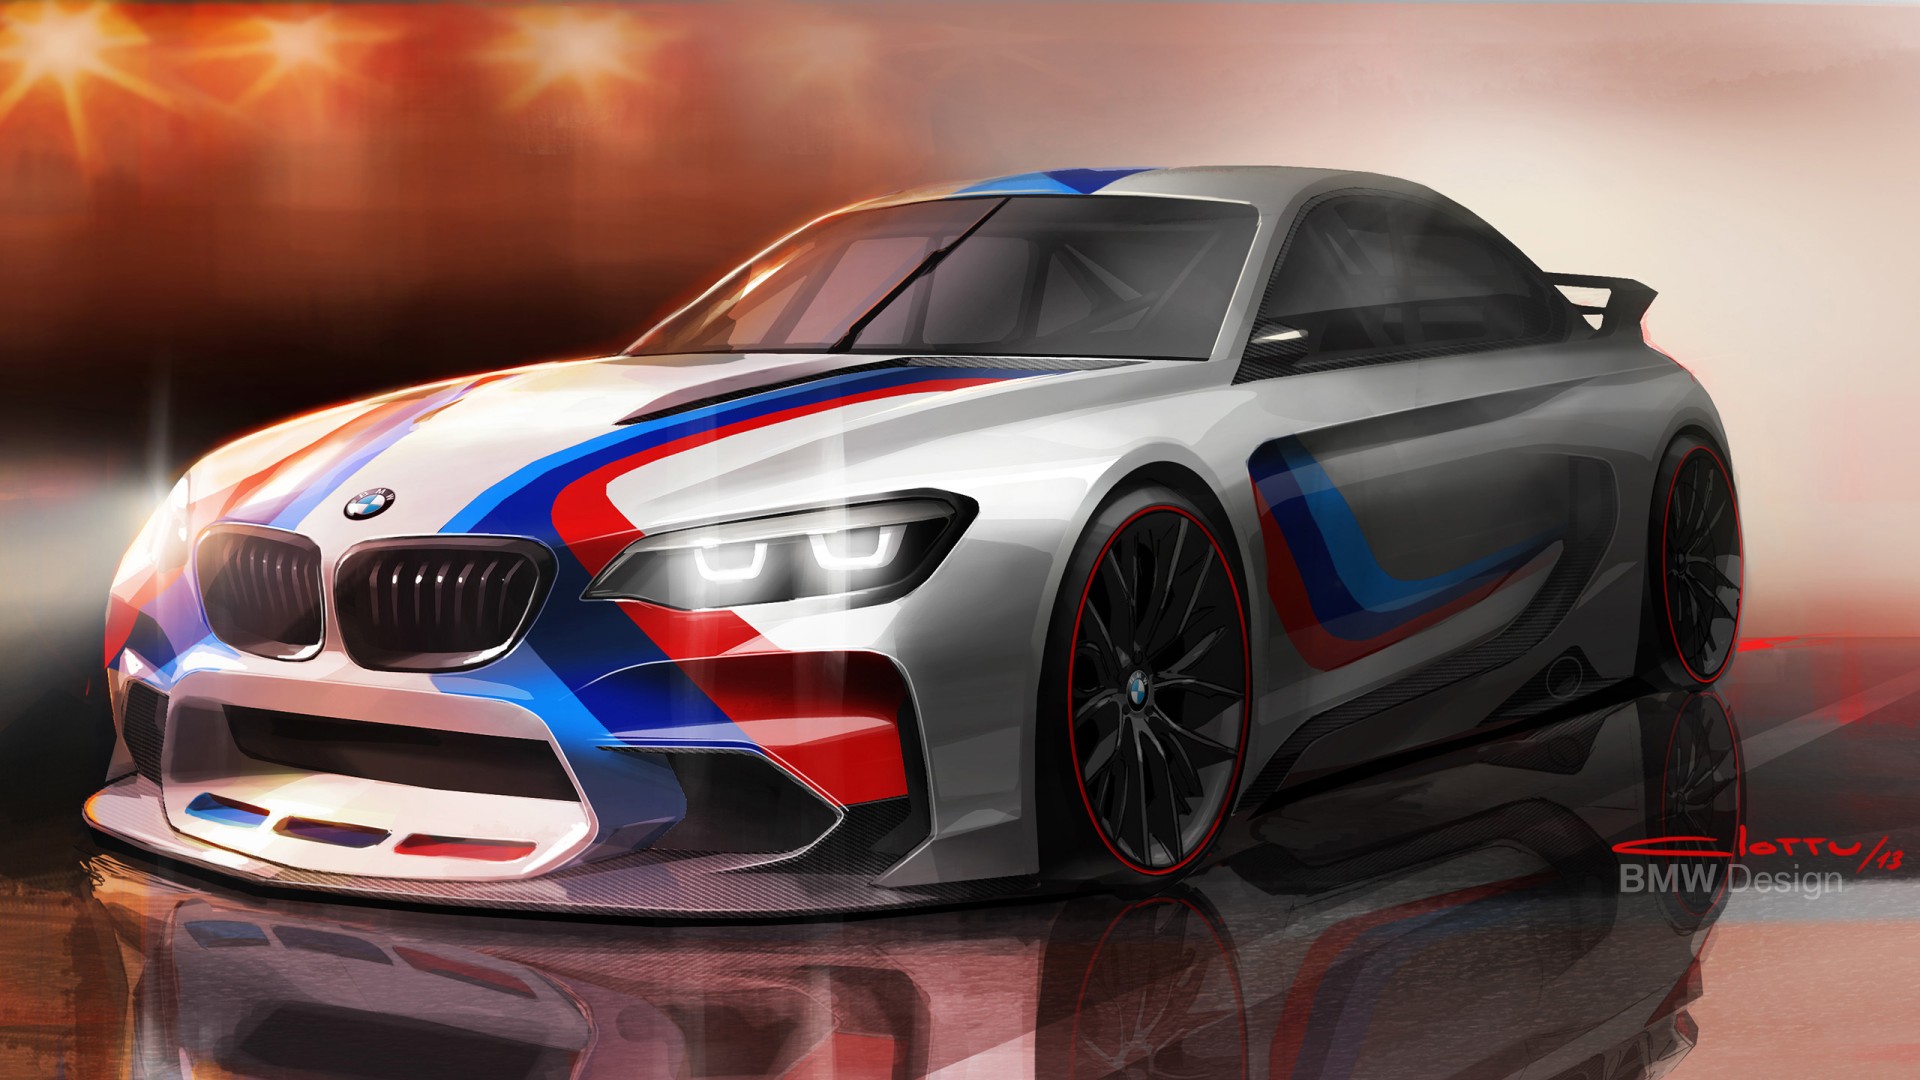 2014 BMW Vision Gran Turismo Concept Wallpaper | HD Car Wallpapers | ID